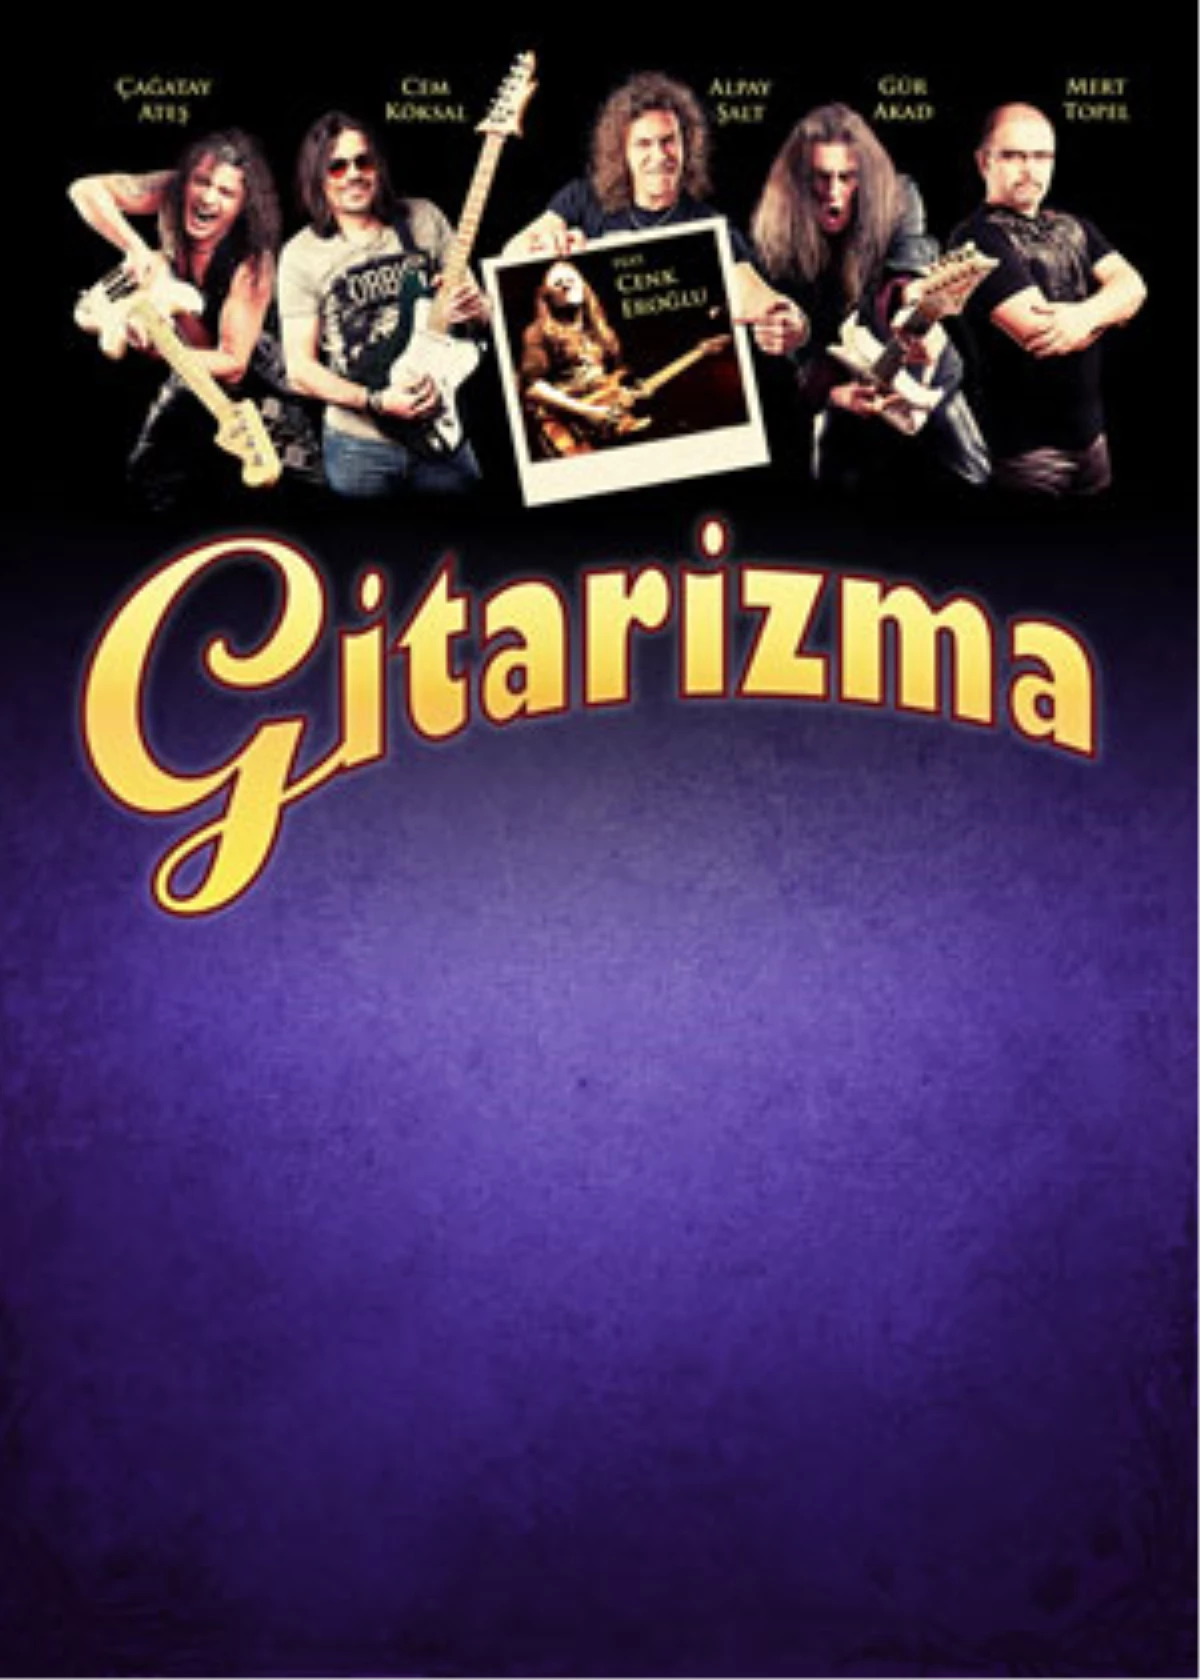 Gitarizma, İstanbul Live Sahnesinde!